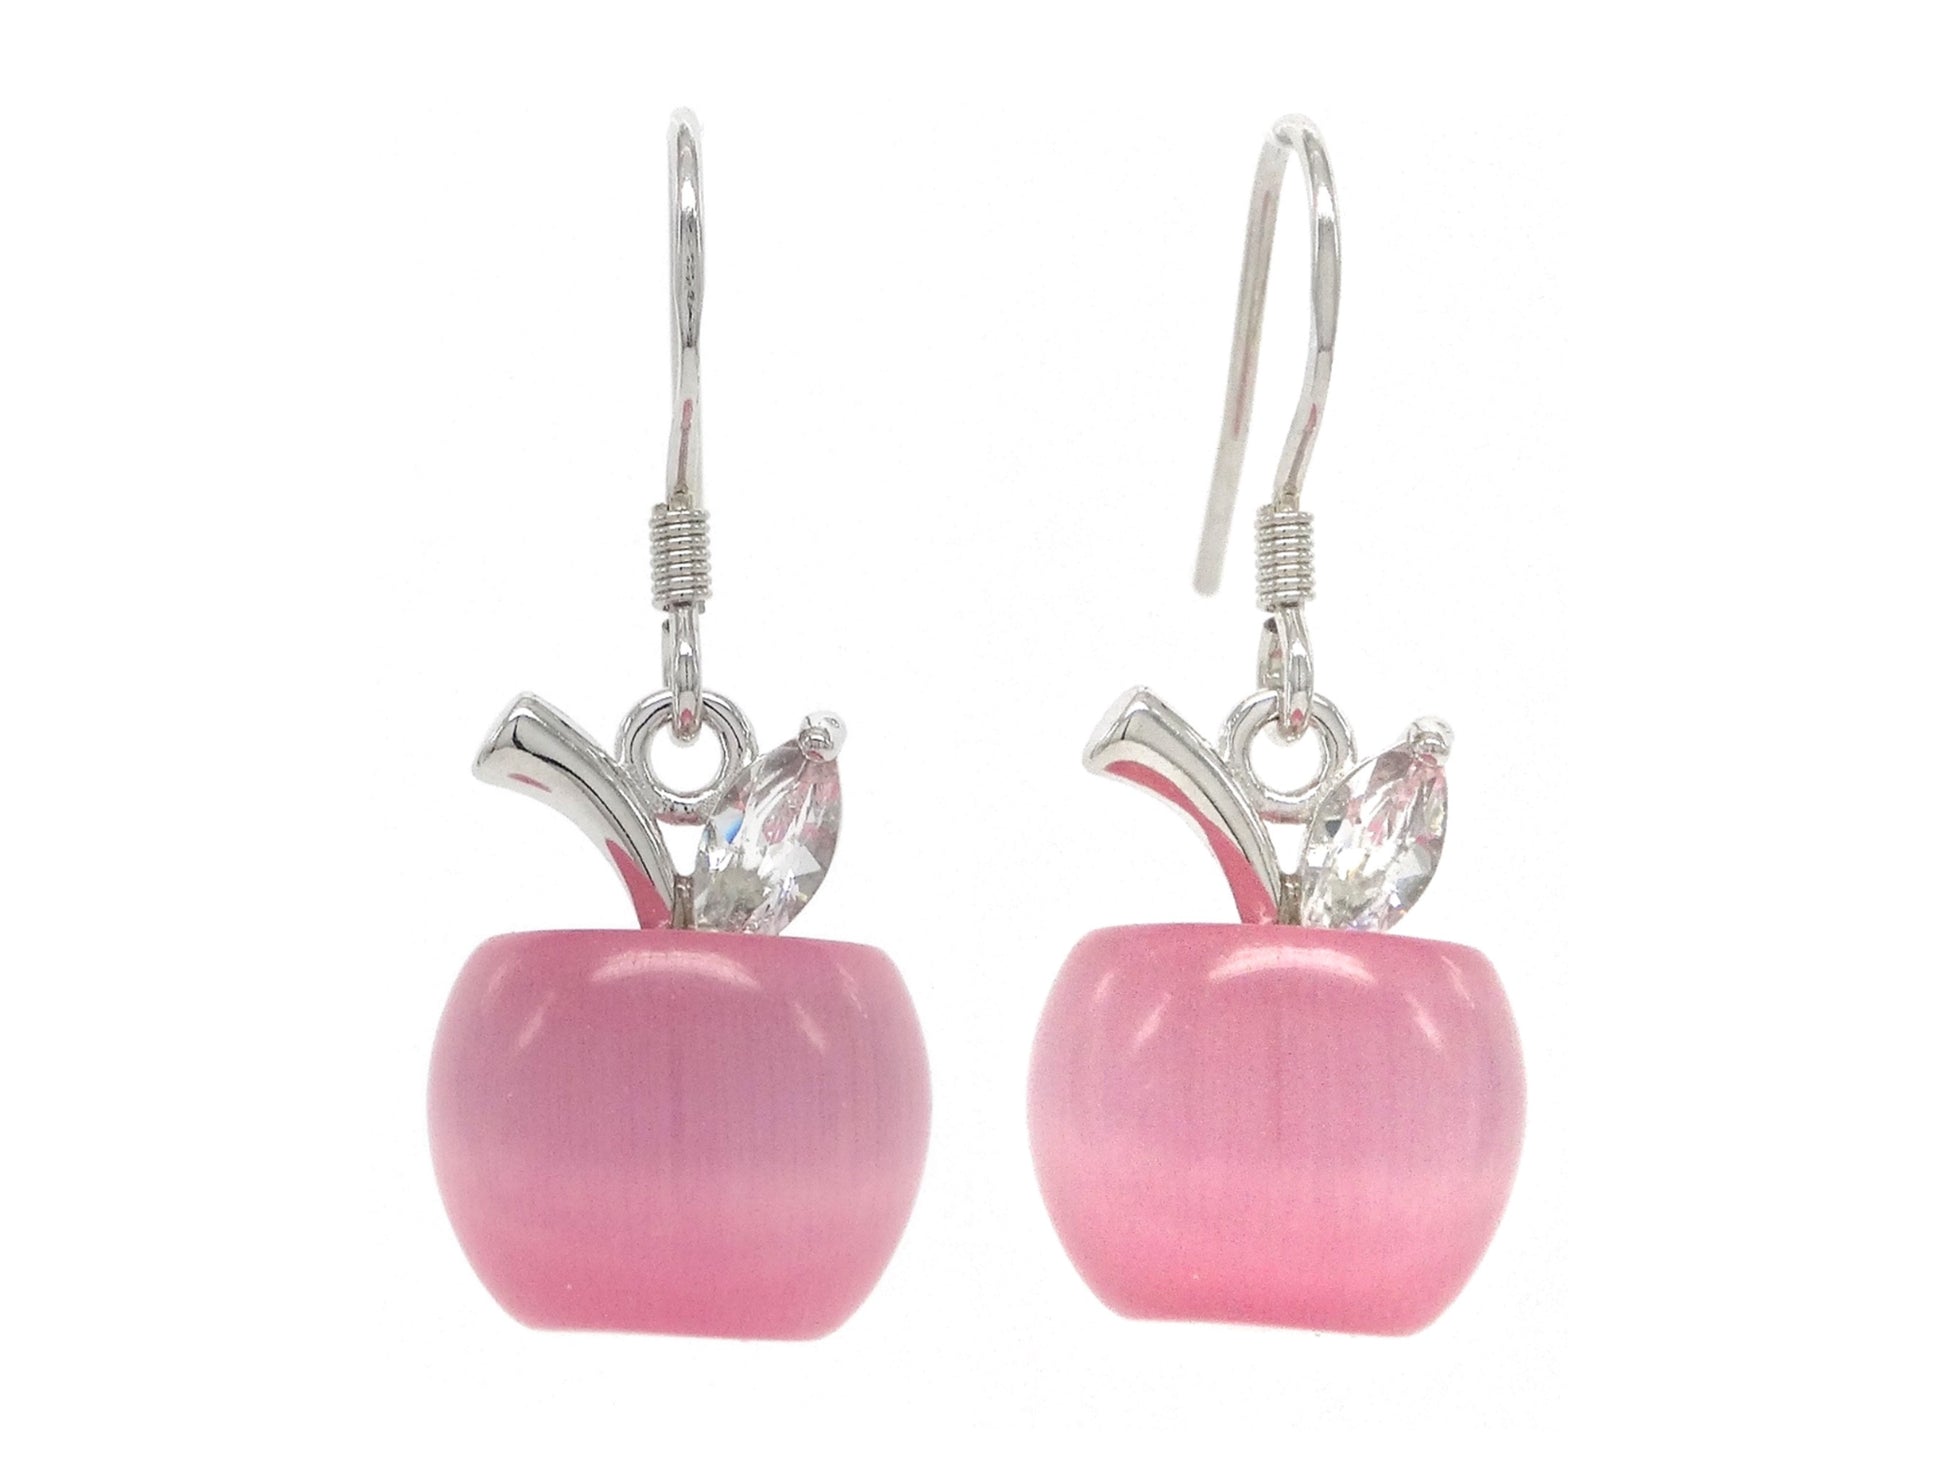 Pink apple earrings MAIN